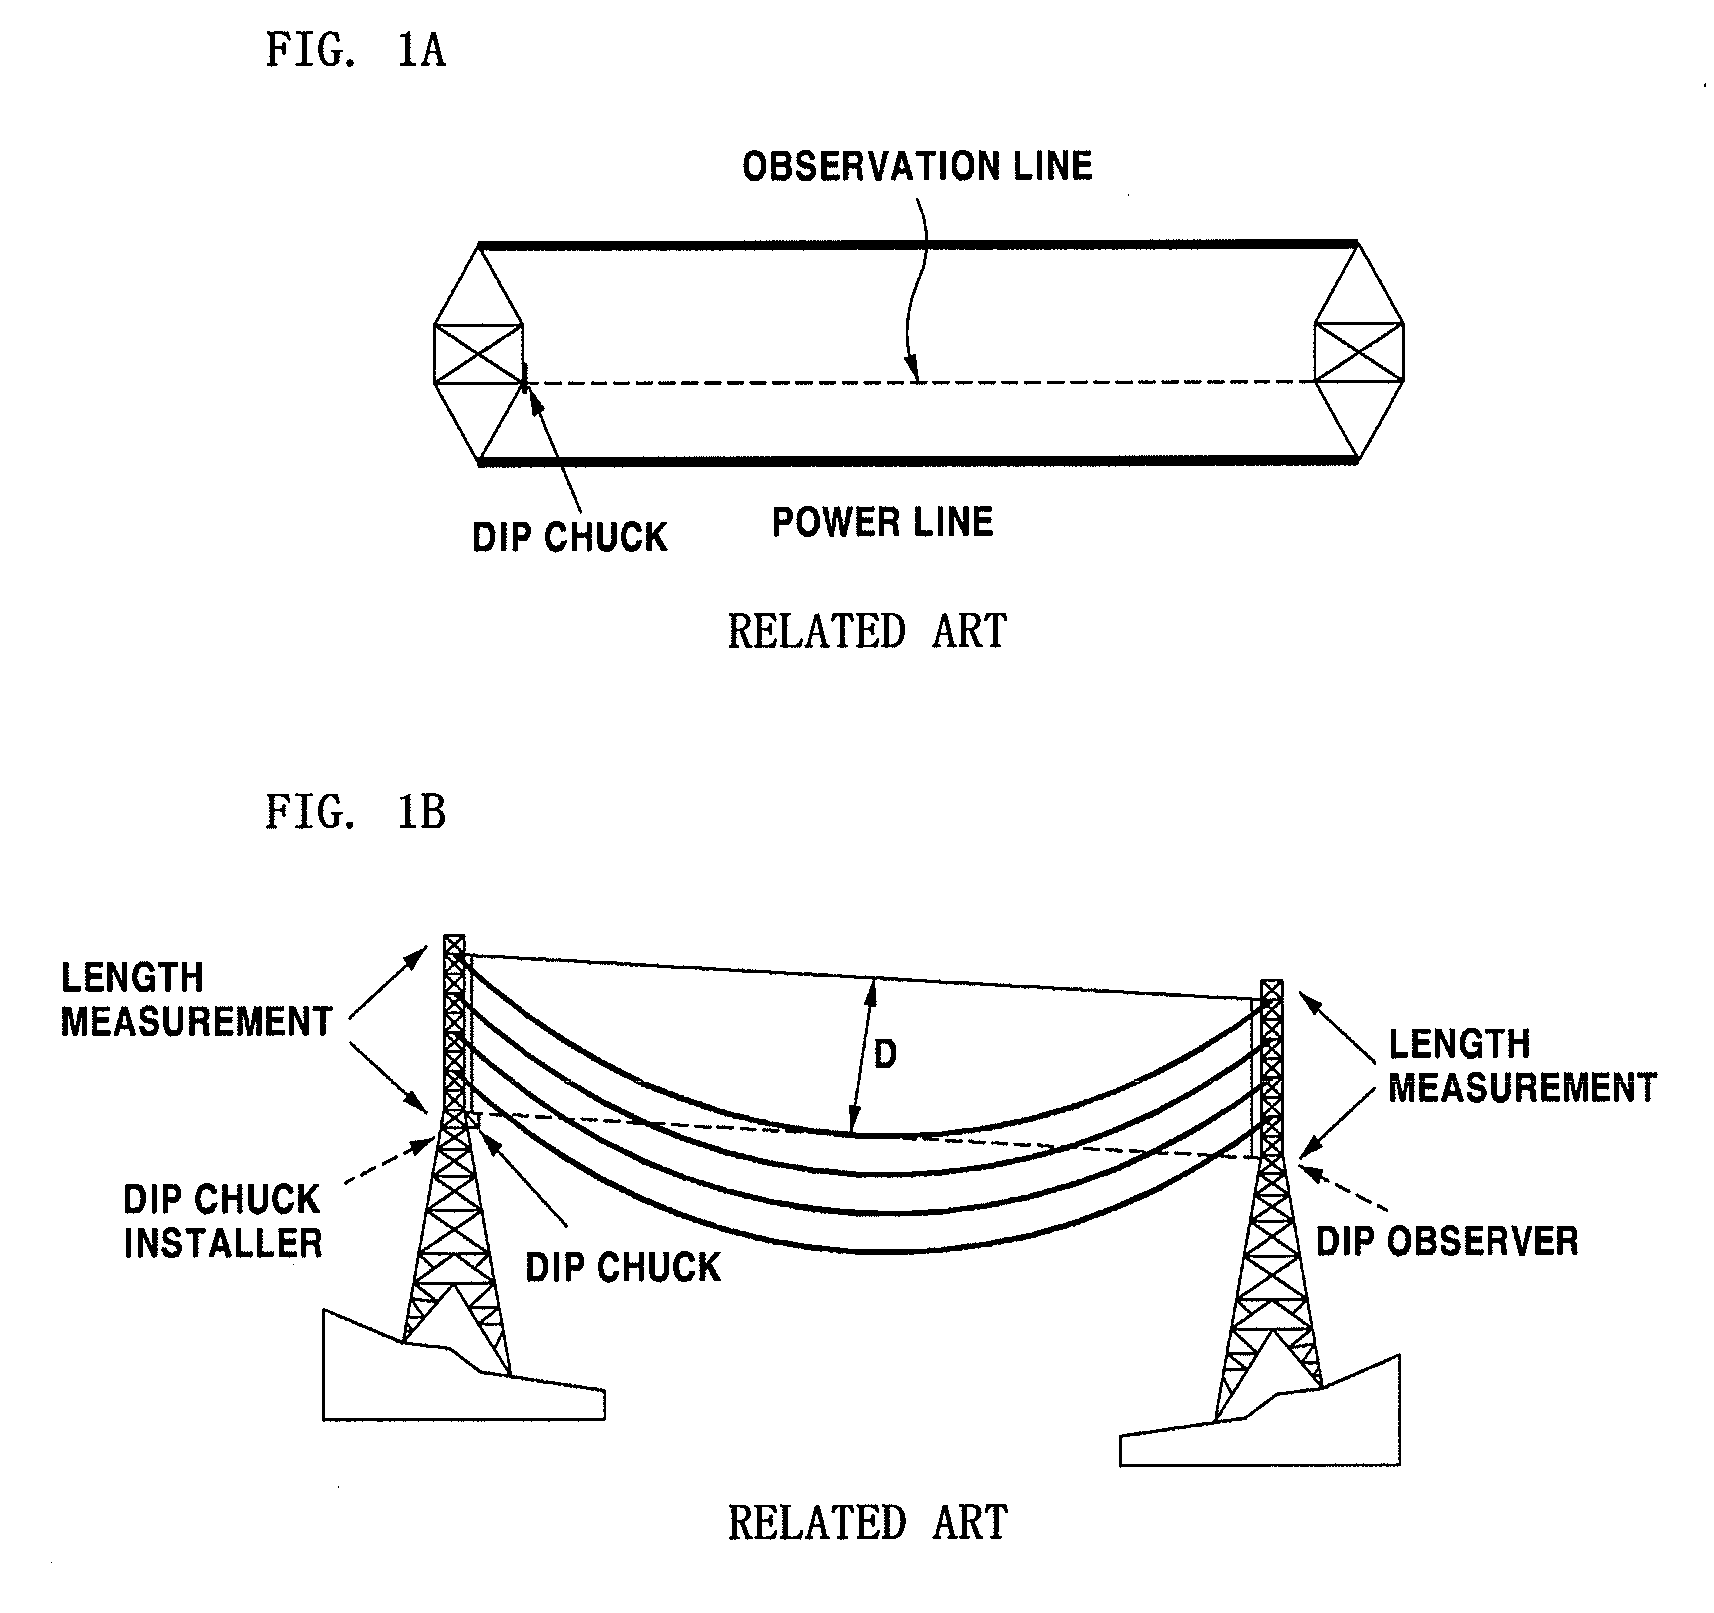 Power transmission line dip measurement method